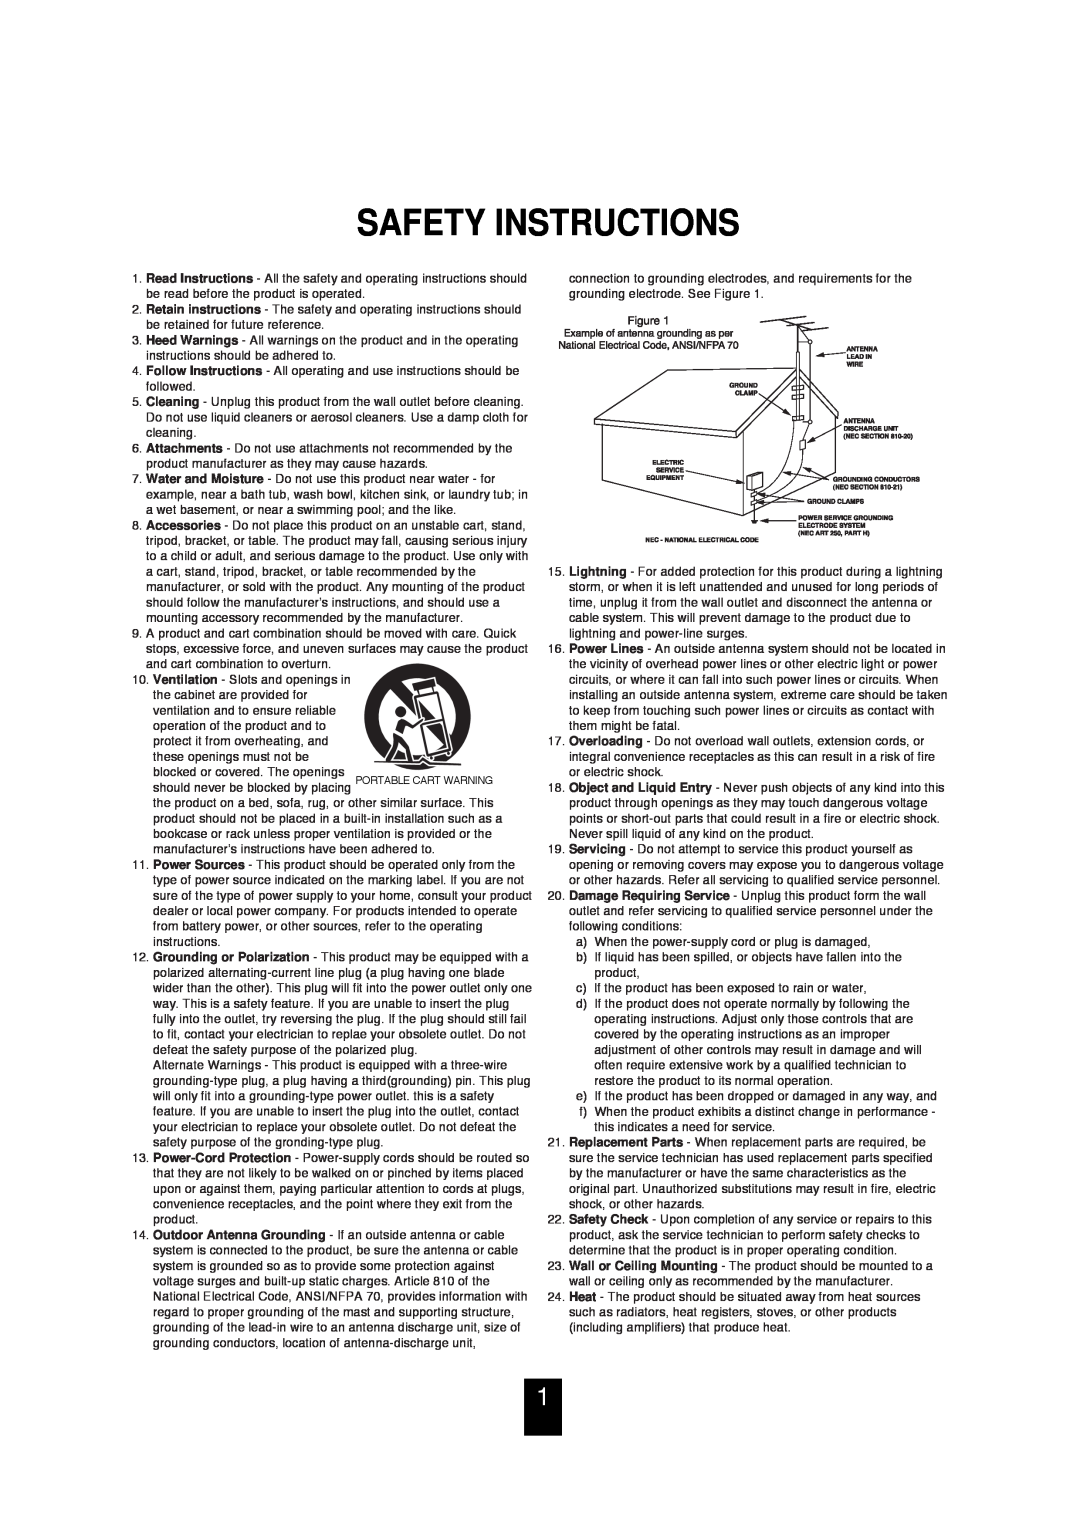 Sherwood RX-4105 manual Safety Instructions 